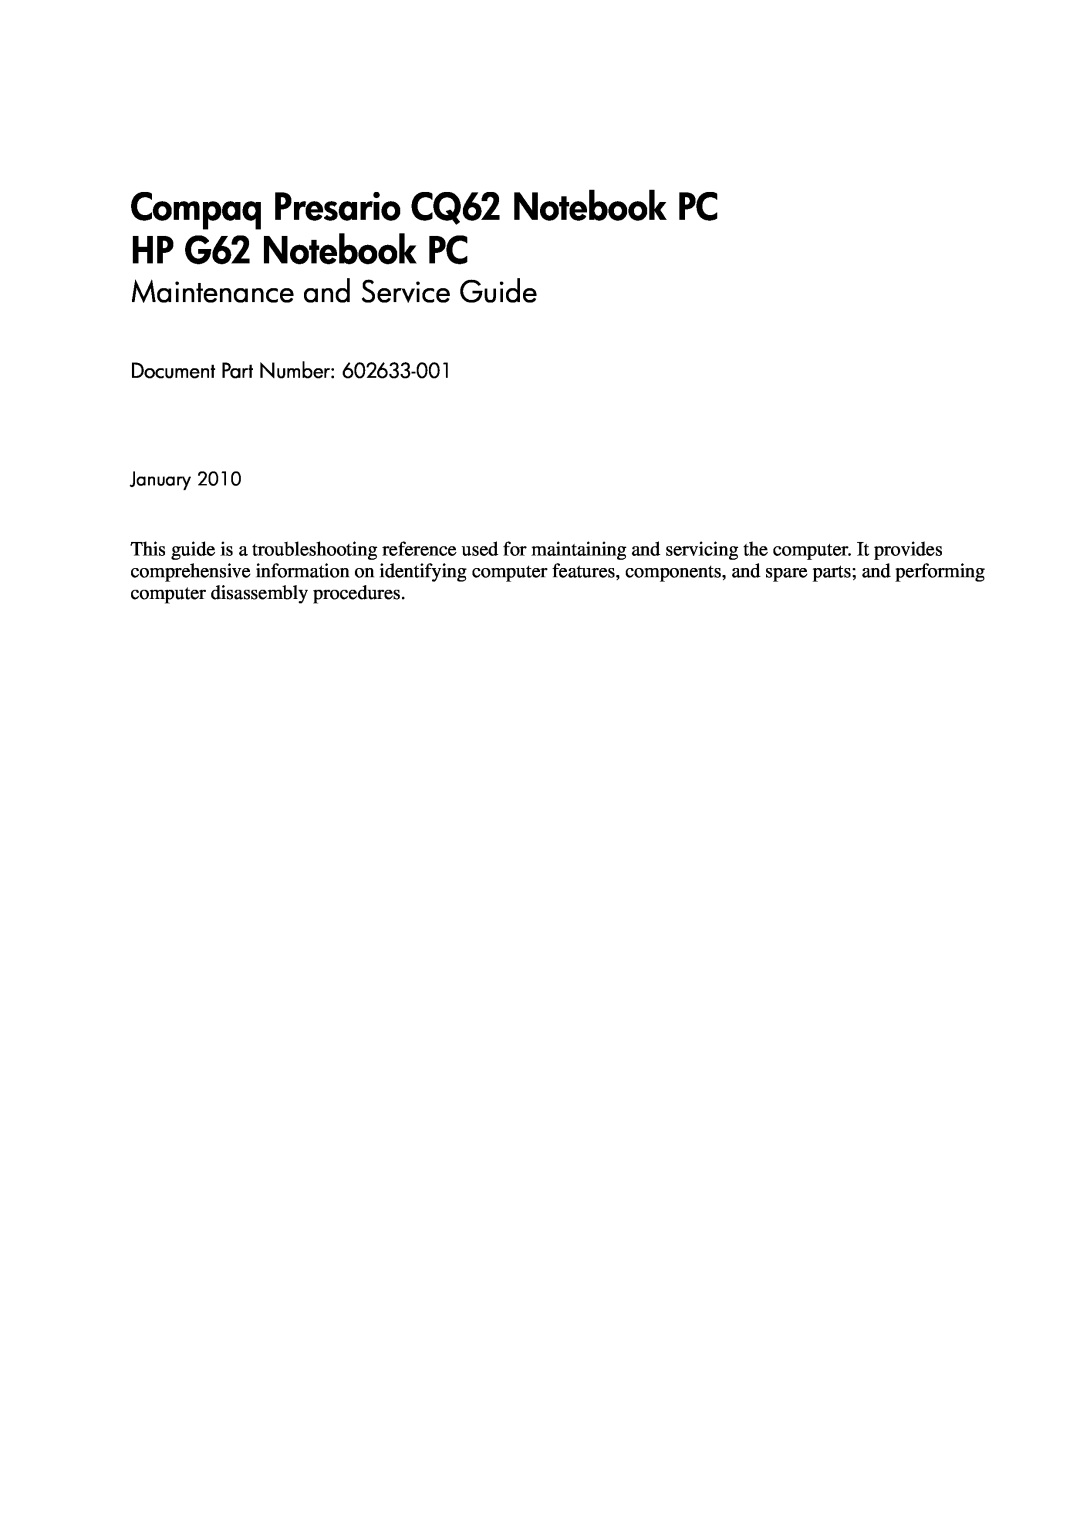 HP CQ62-252TX manual Compaq Presario CQ62 Notebook PC HP G62 Notebook PC, Maintenance and Service Guide, January 